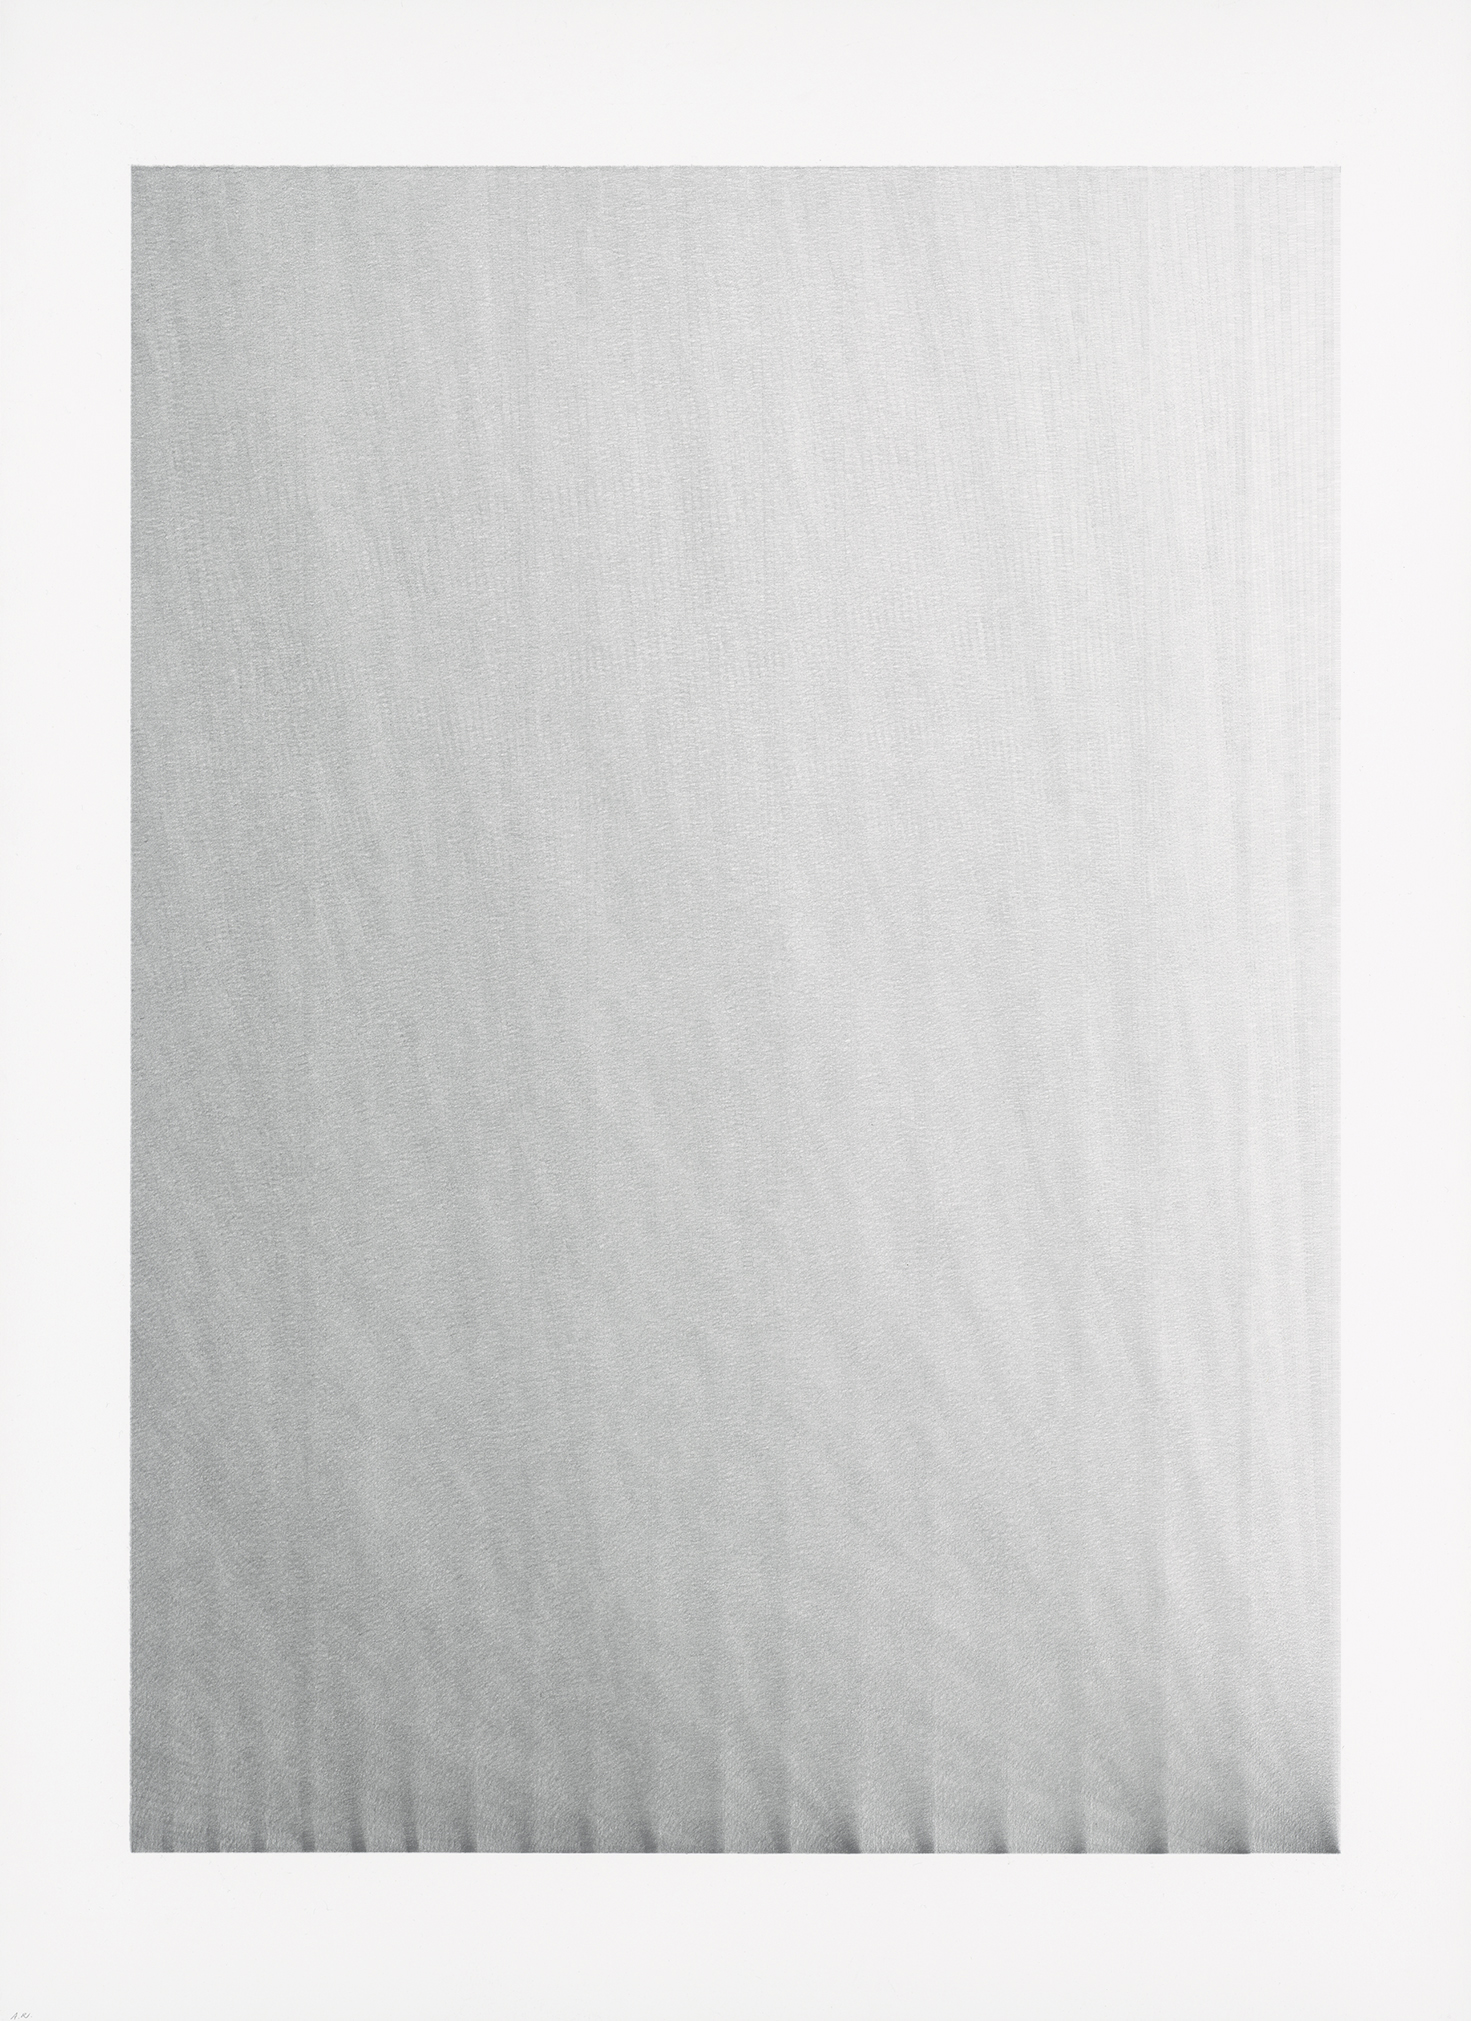 Alexandra Roozen, Sightline #06, 84x60 cm, pencil on paper, 2020